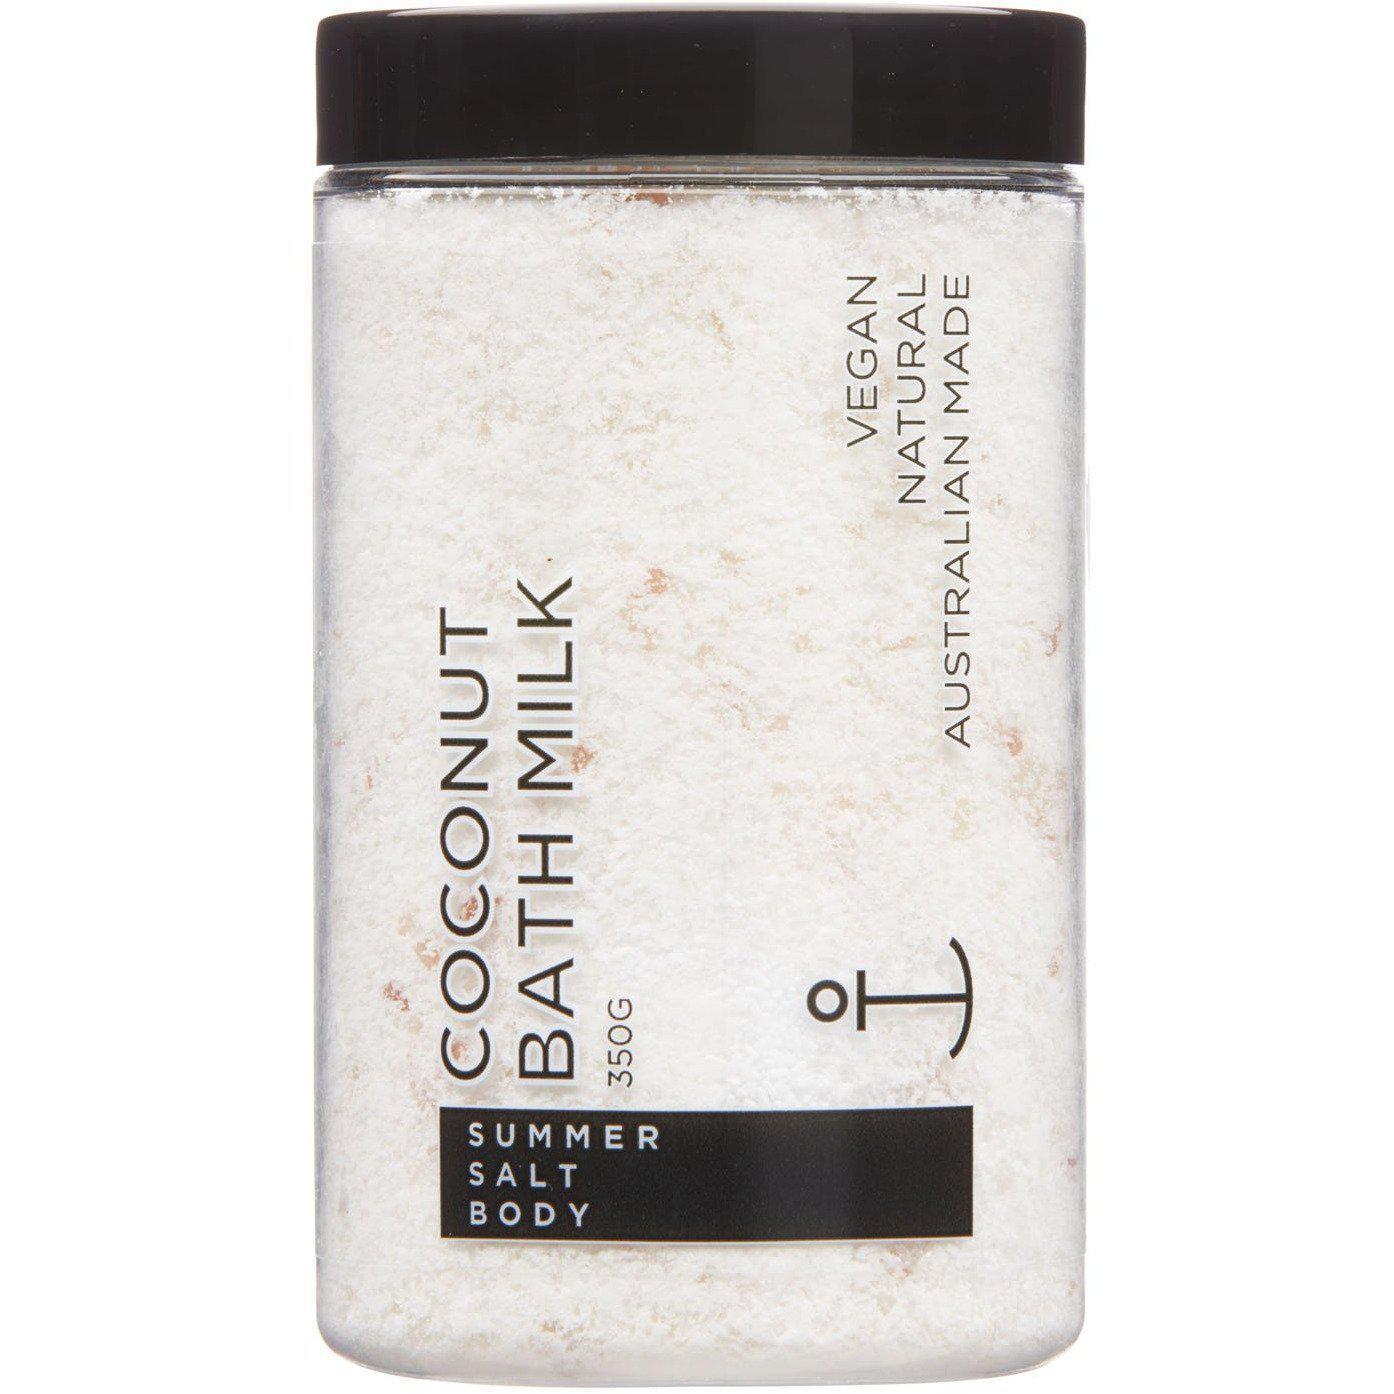 Coconut Bath Milk - 350g Tub-Beauty & Well-Being-Summer Salt Body-The Bay Room